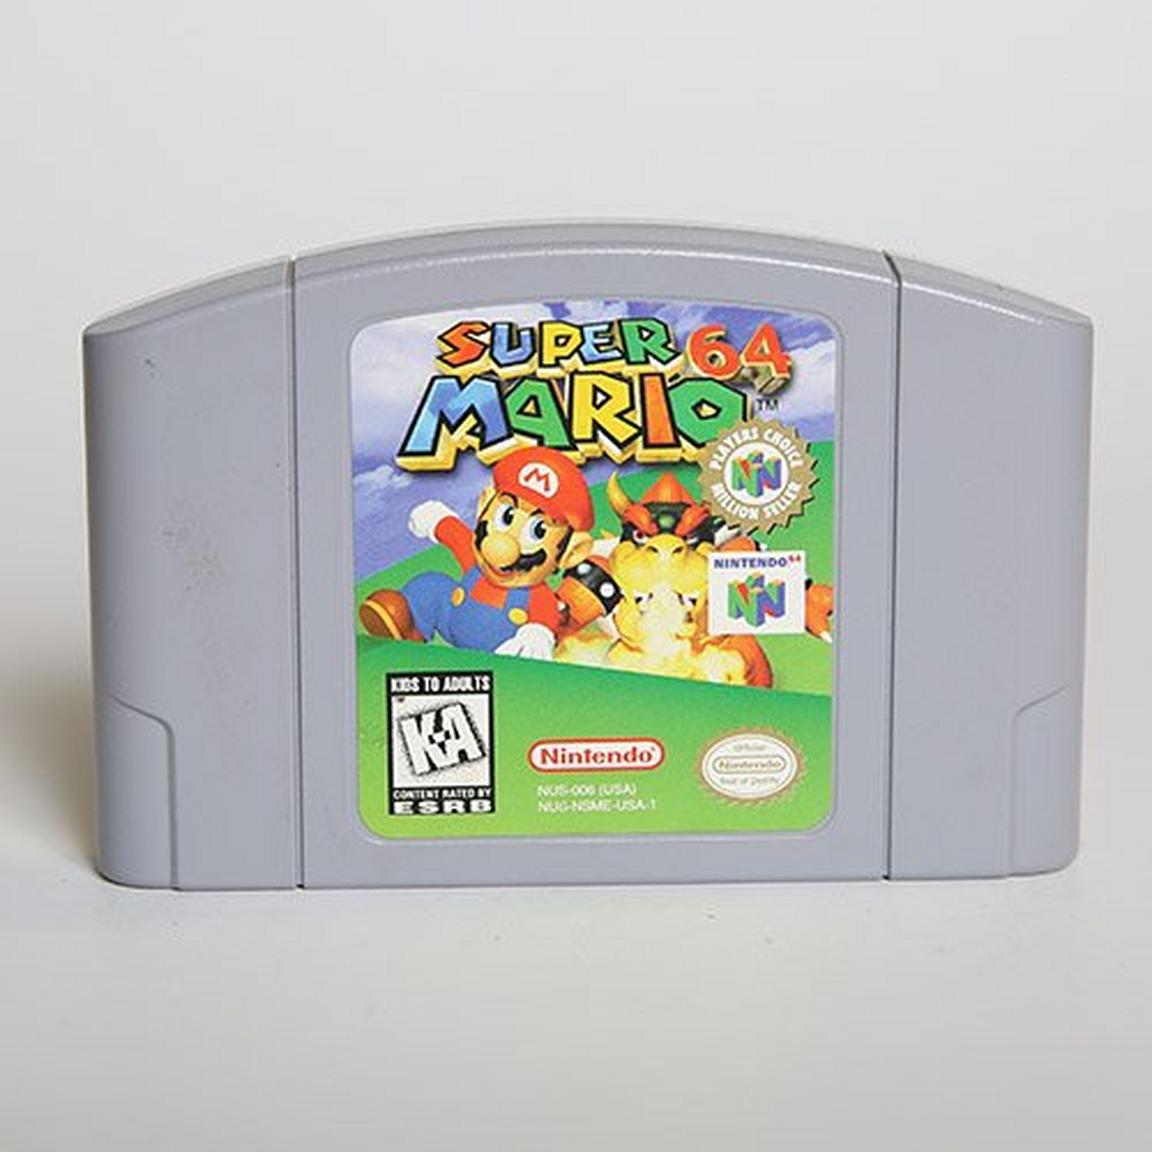 Super Mario 64 - Nintendo 64, Pre-Owned